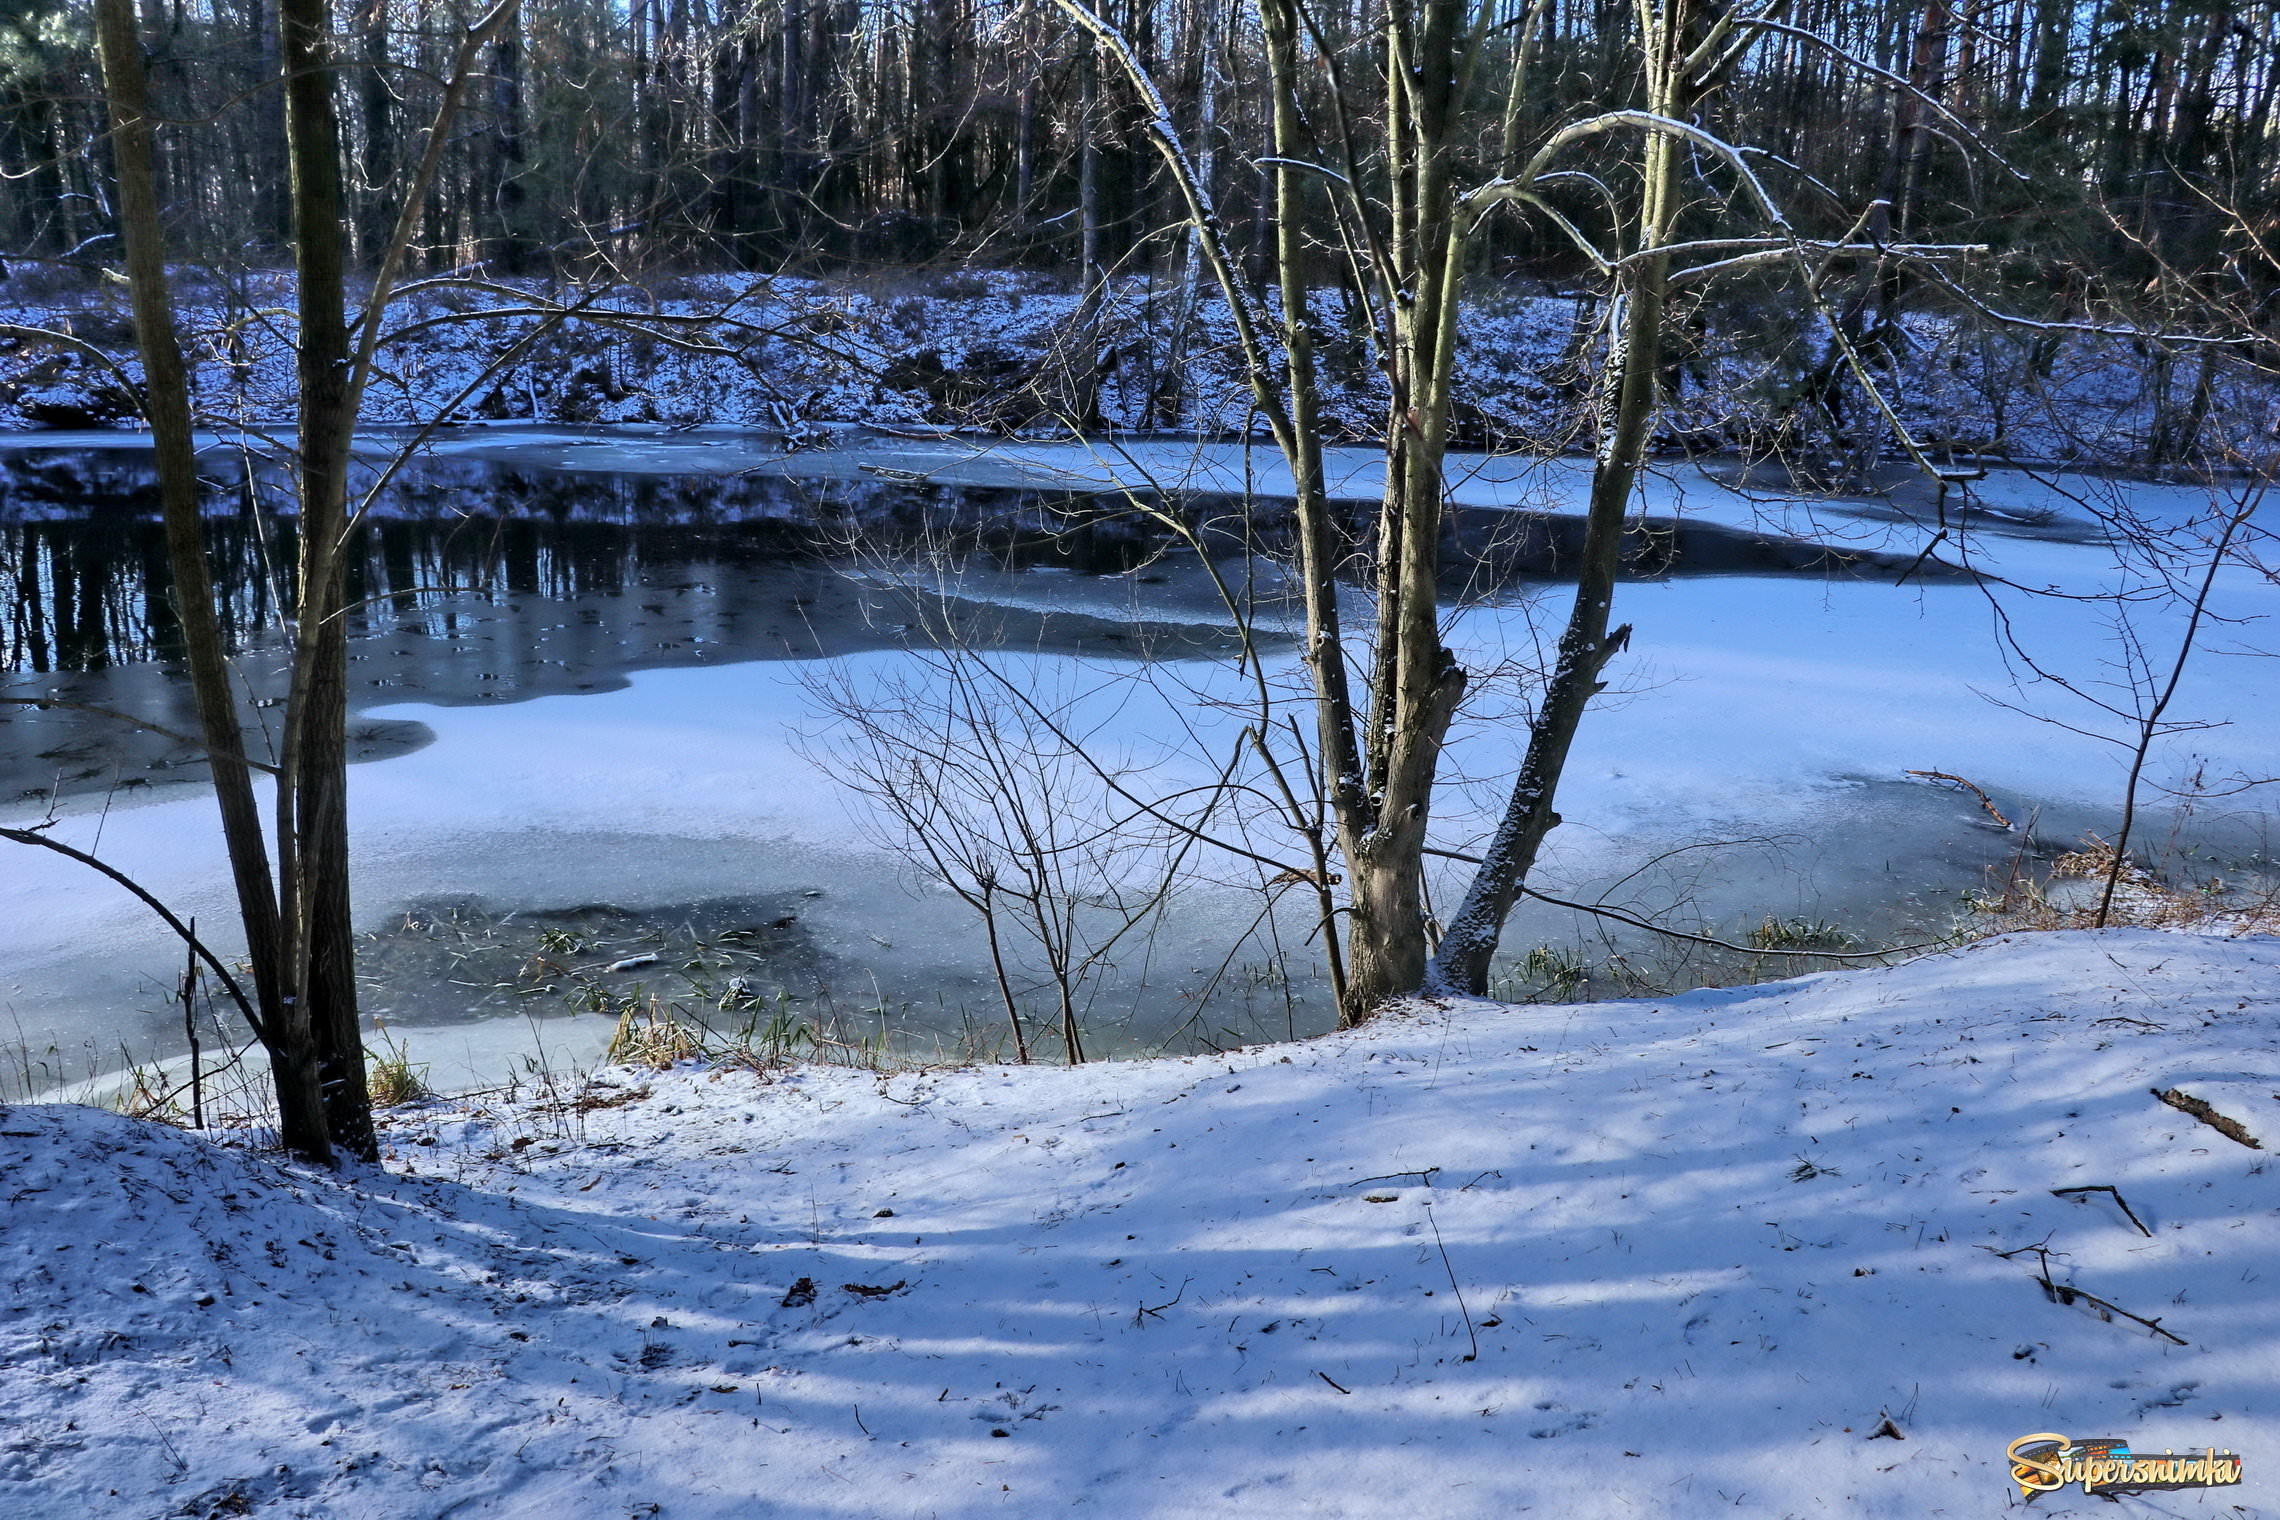  Зимняя речка.